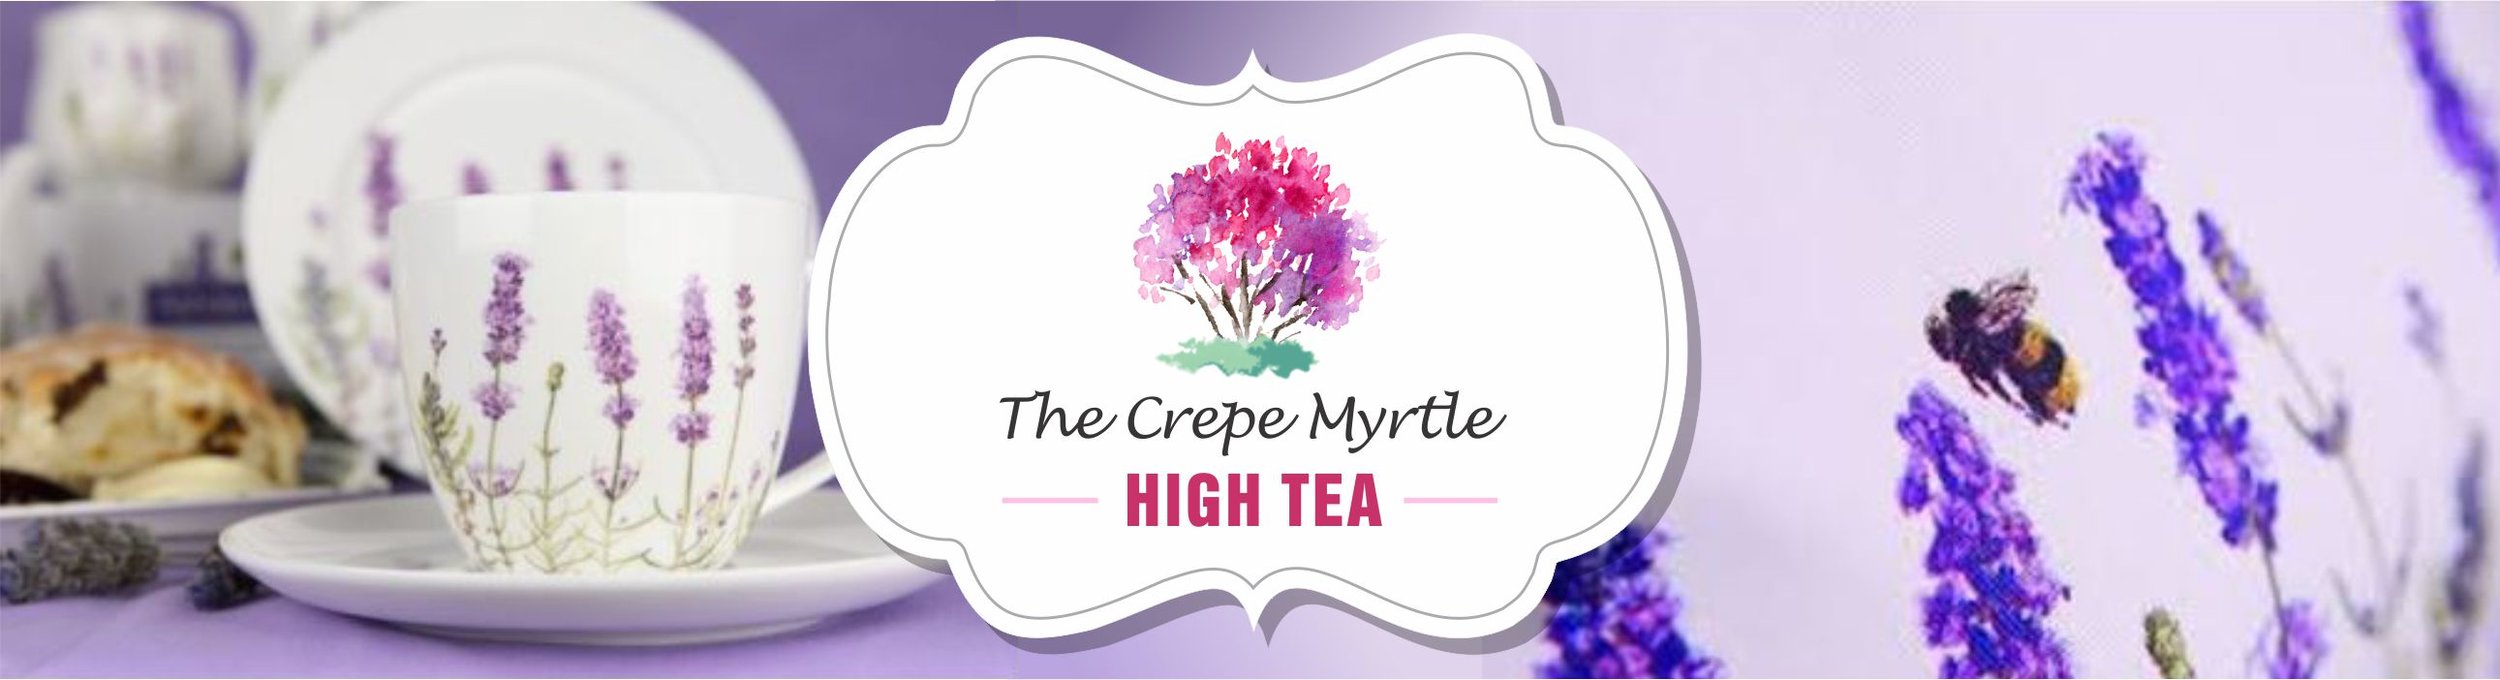 crepe myrtle tea and coffee rooms high tea.jpg